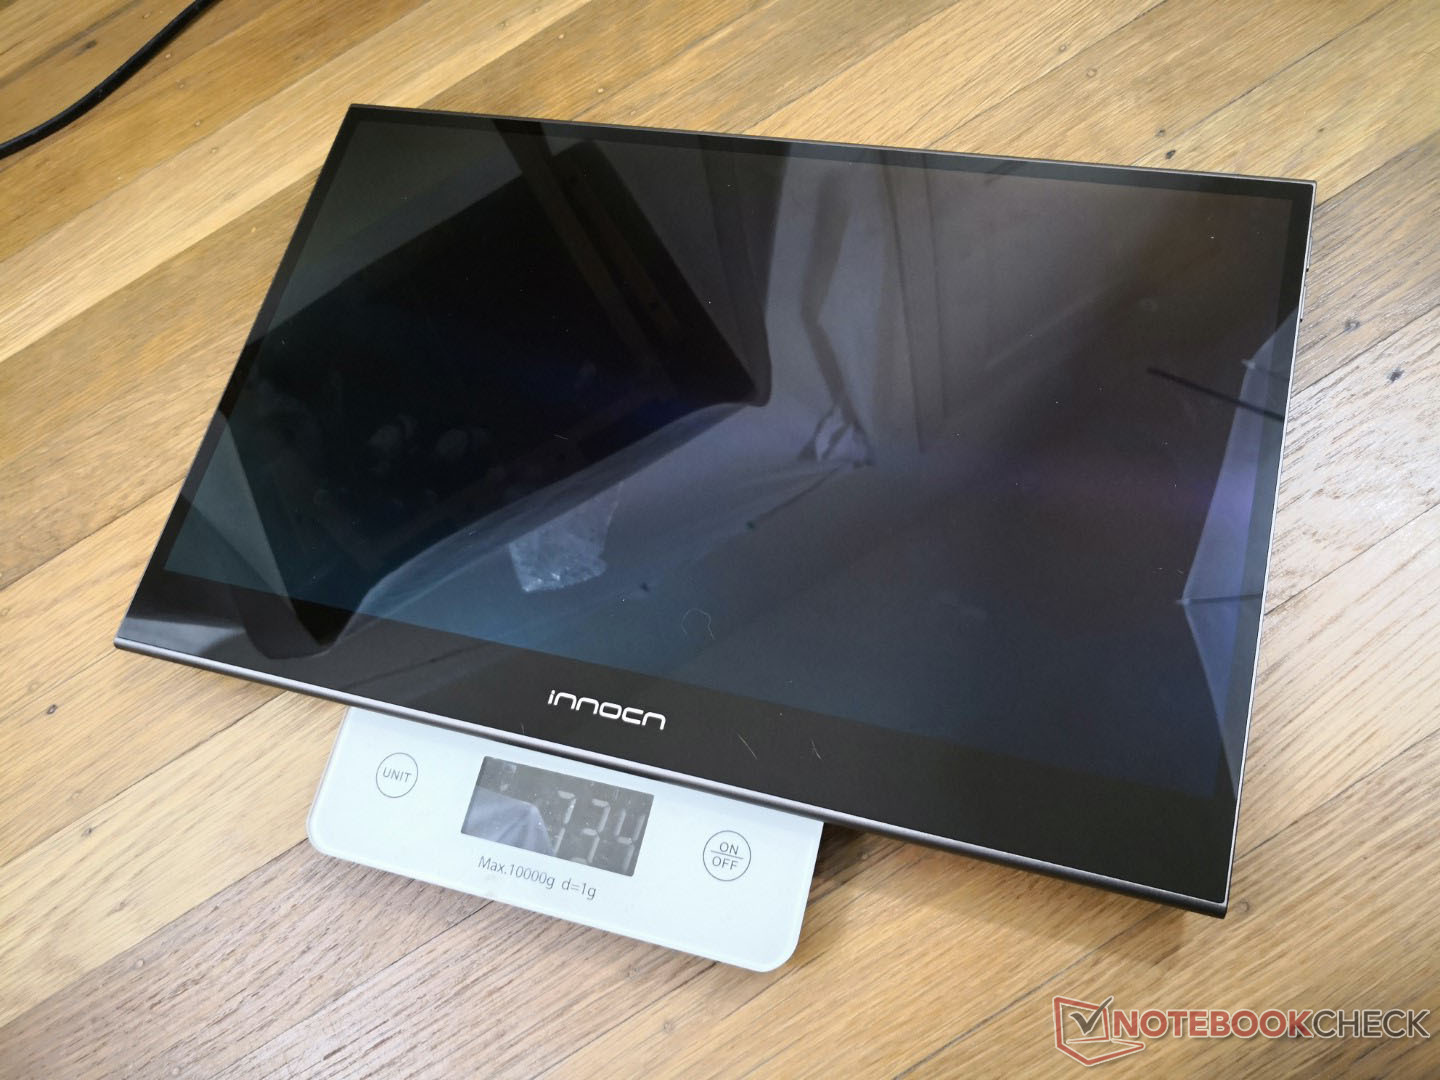 OLED Portable Monitor In-Depth Review (INNOCN 15.6 Full HD 1080p) 